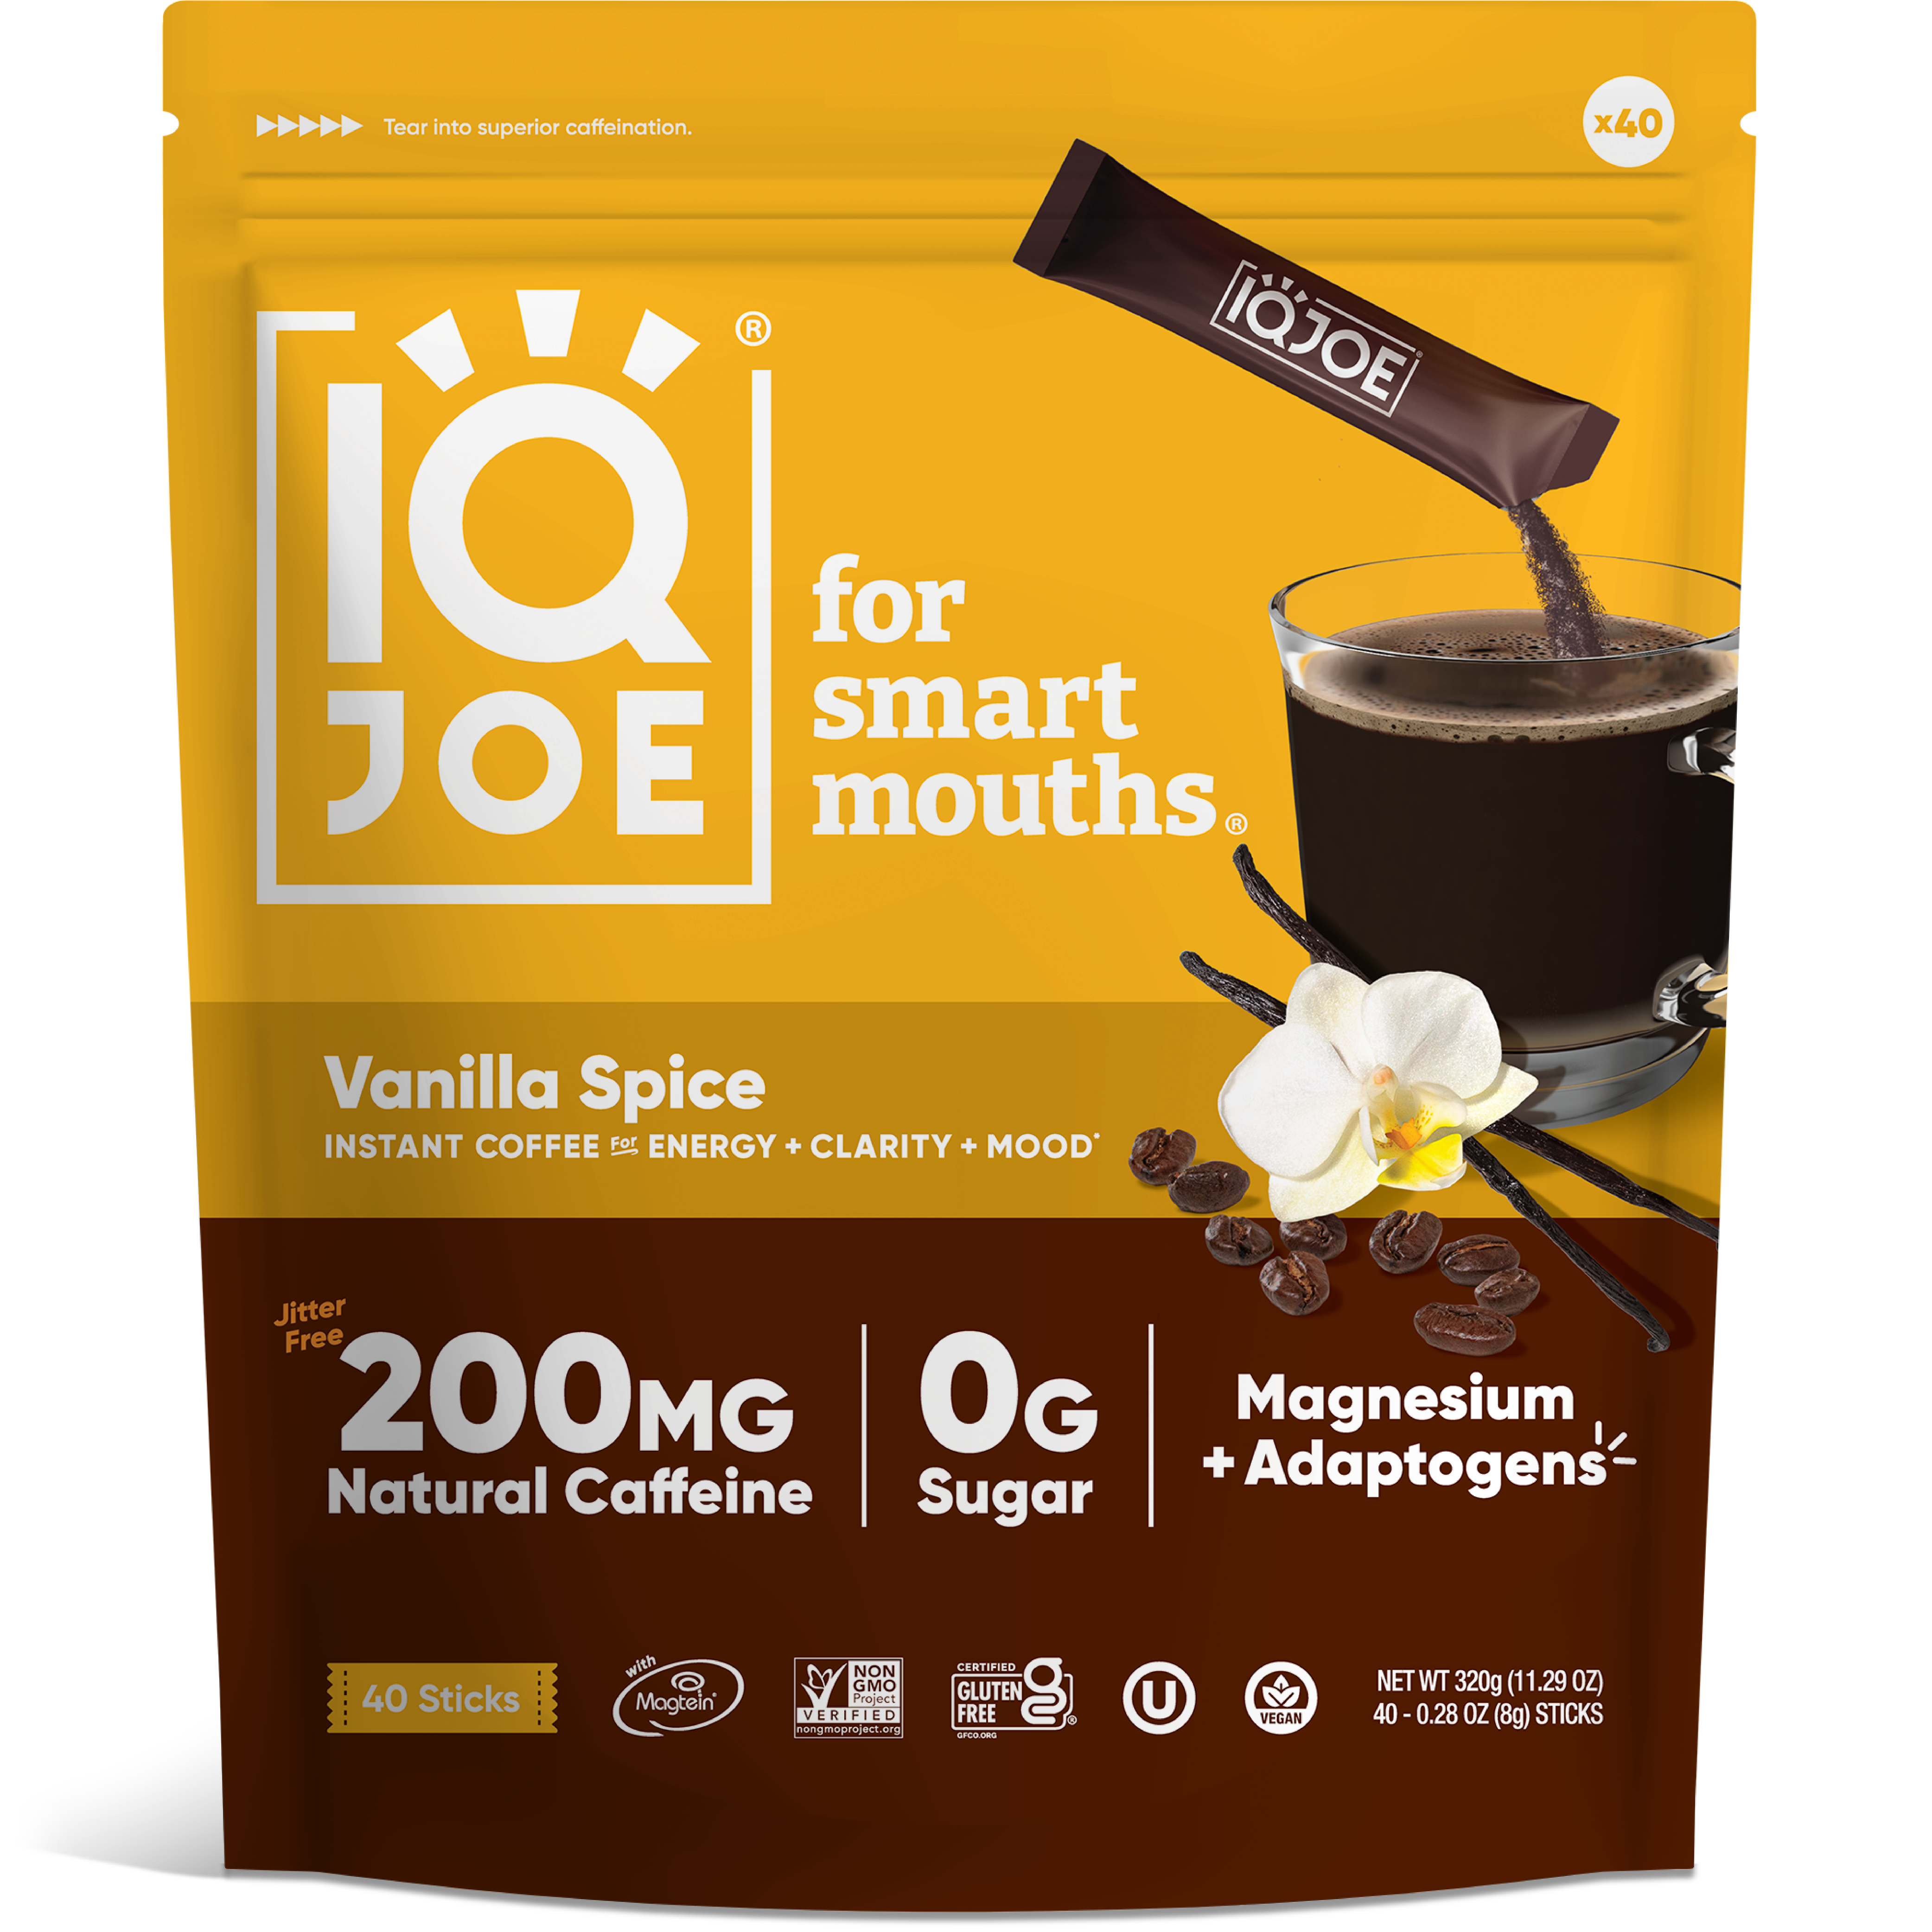 IQJOE Vanilla Spice Mushroom Coffee. Lion's Mane Mushroom Coffee, Apoptogenic, Nootropic Coffee.